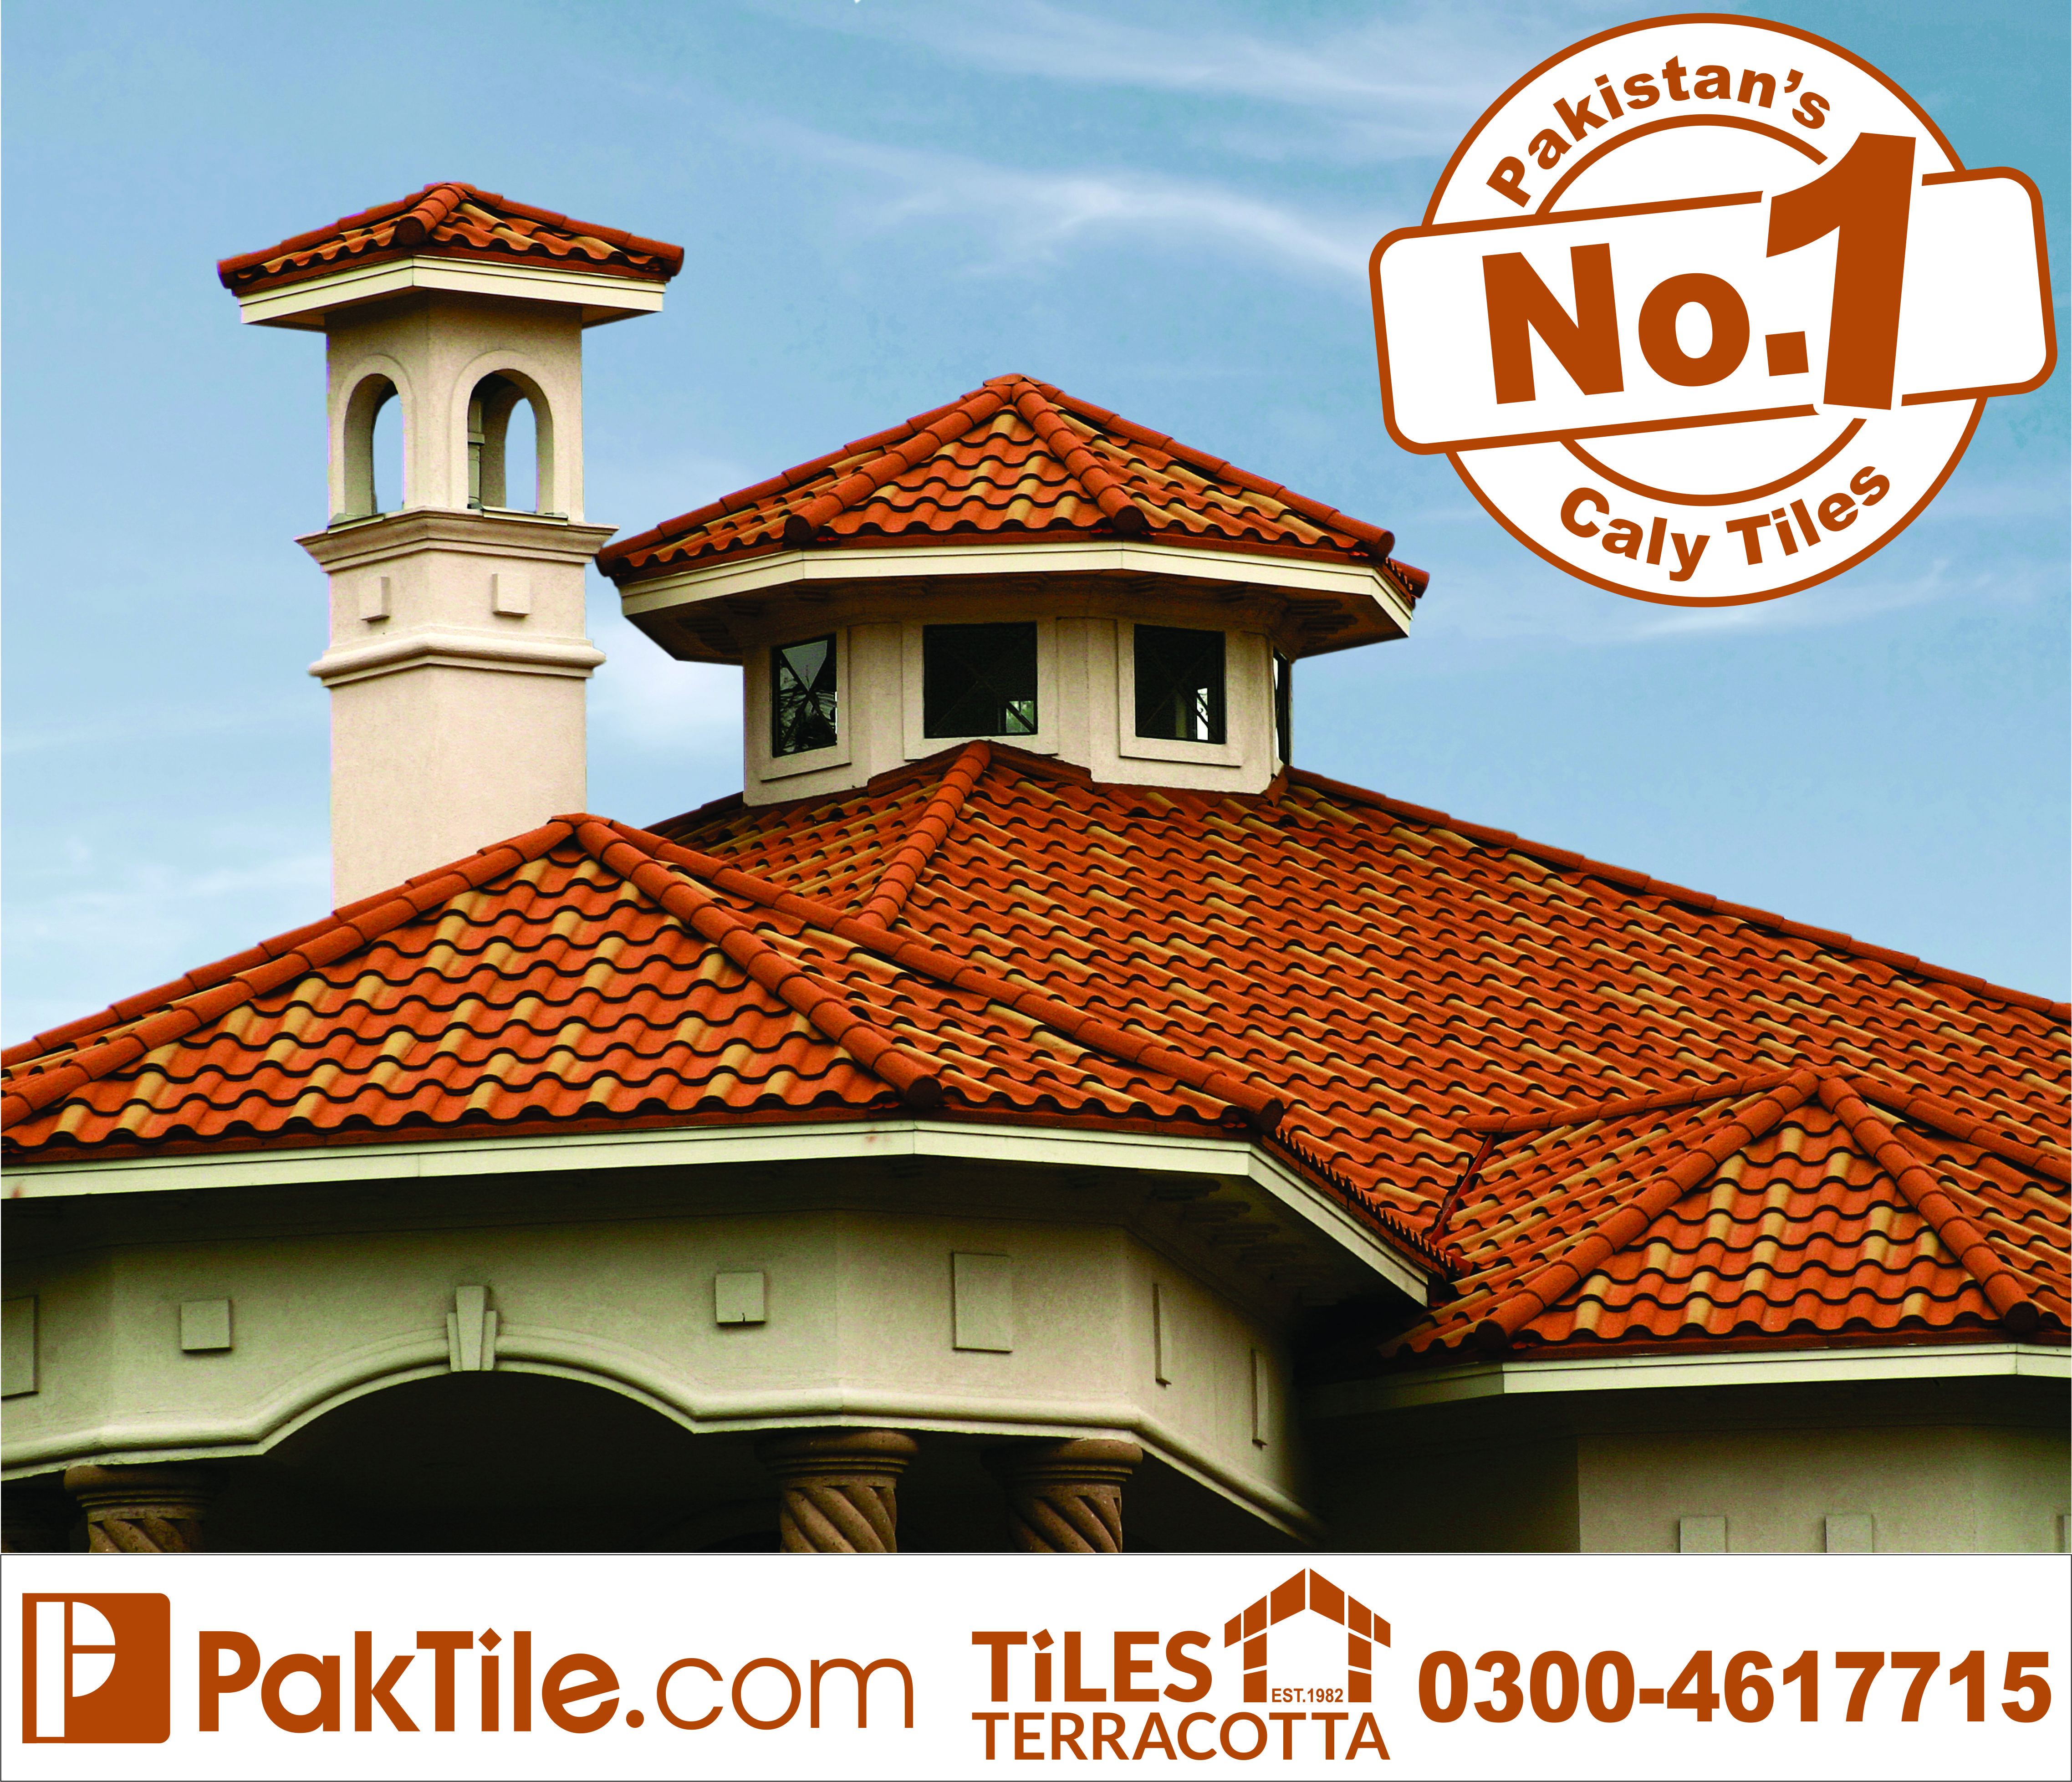 3 Pak clay tiles lahore khaprail design roof tiles installation pictures of concrete roof tiles images